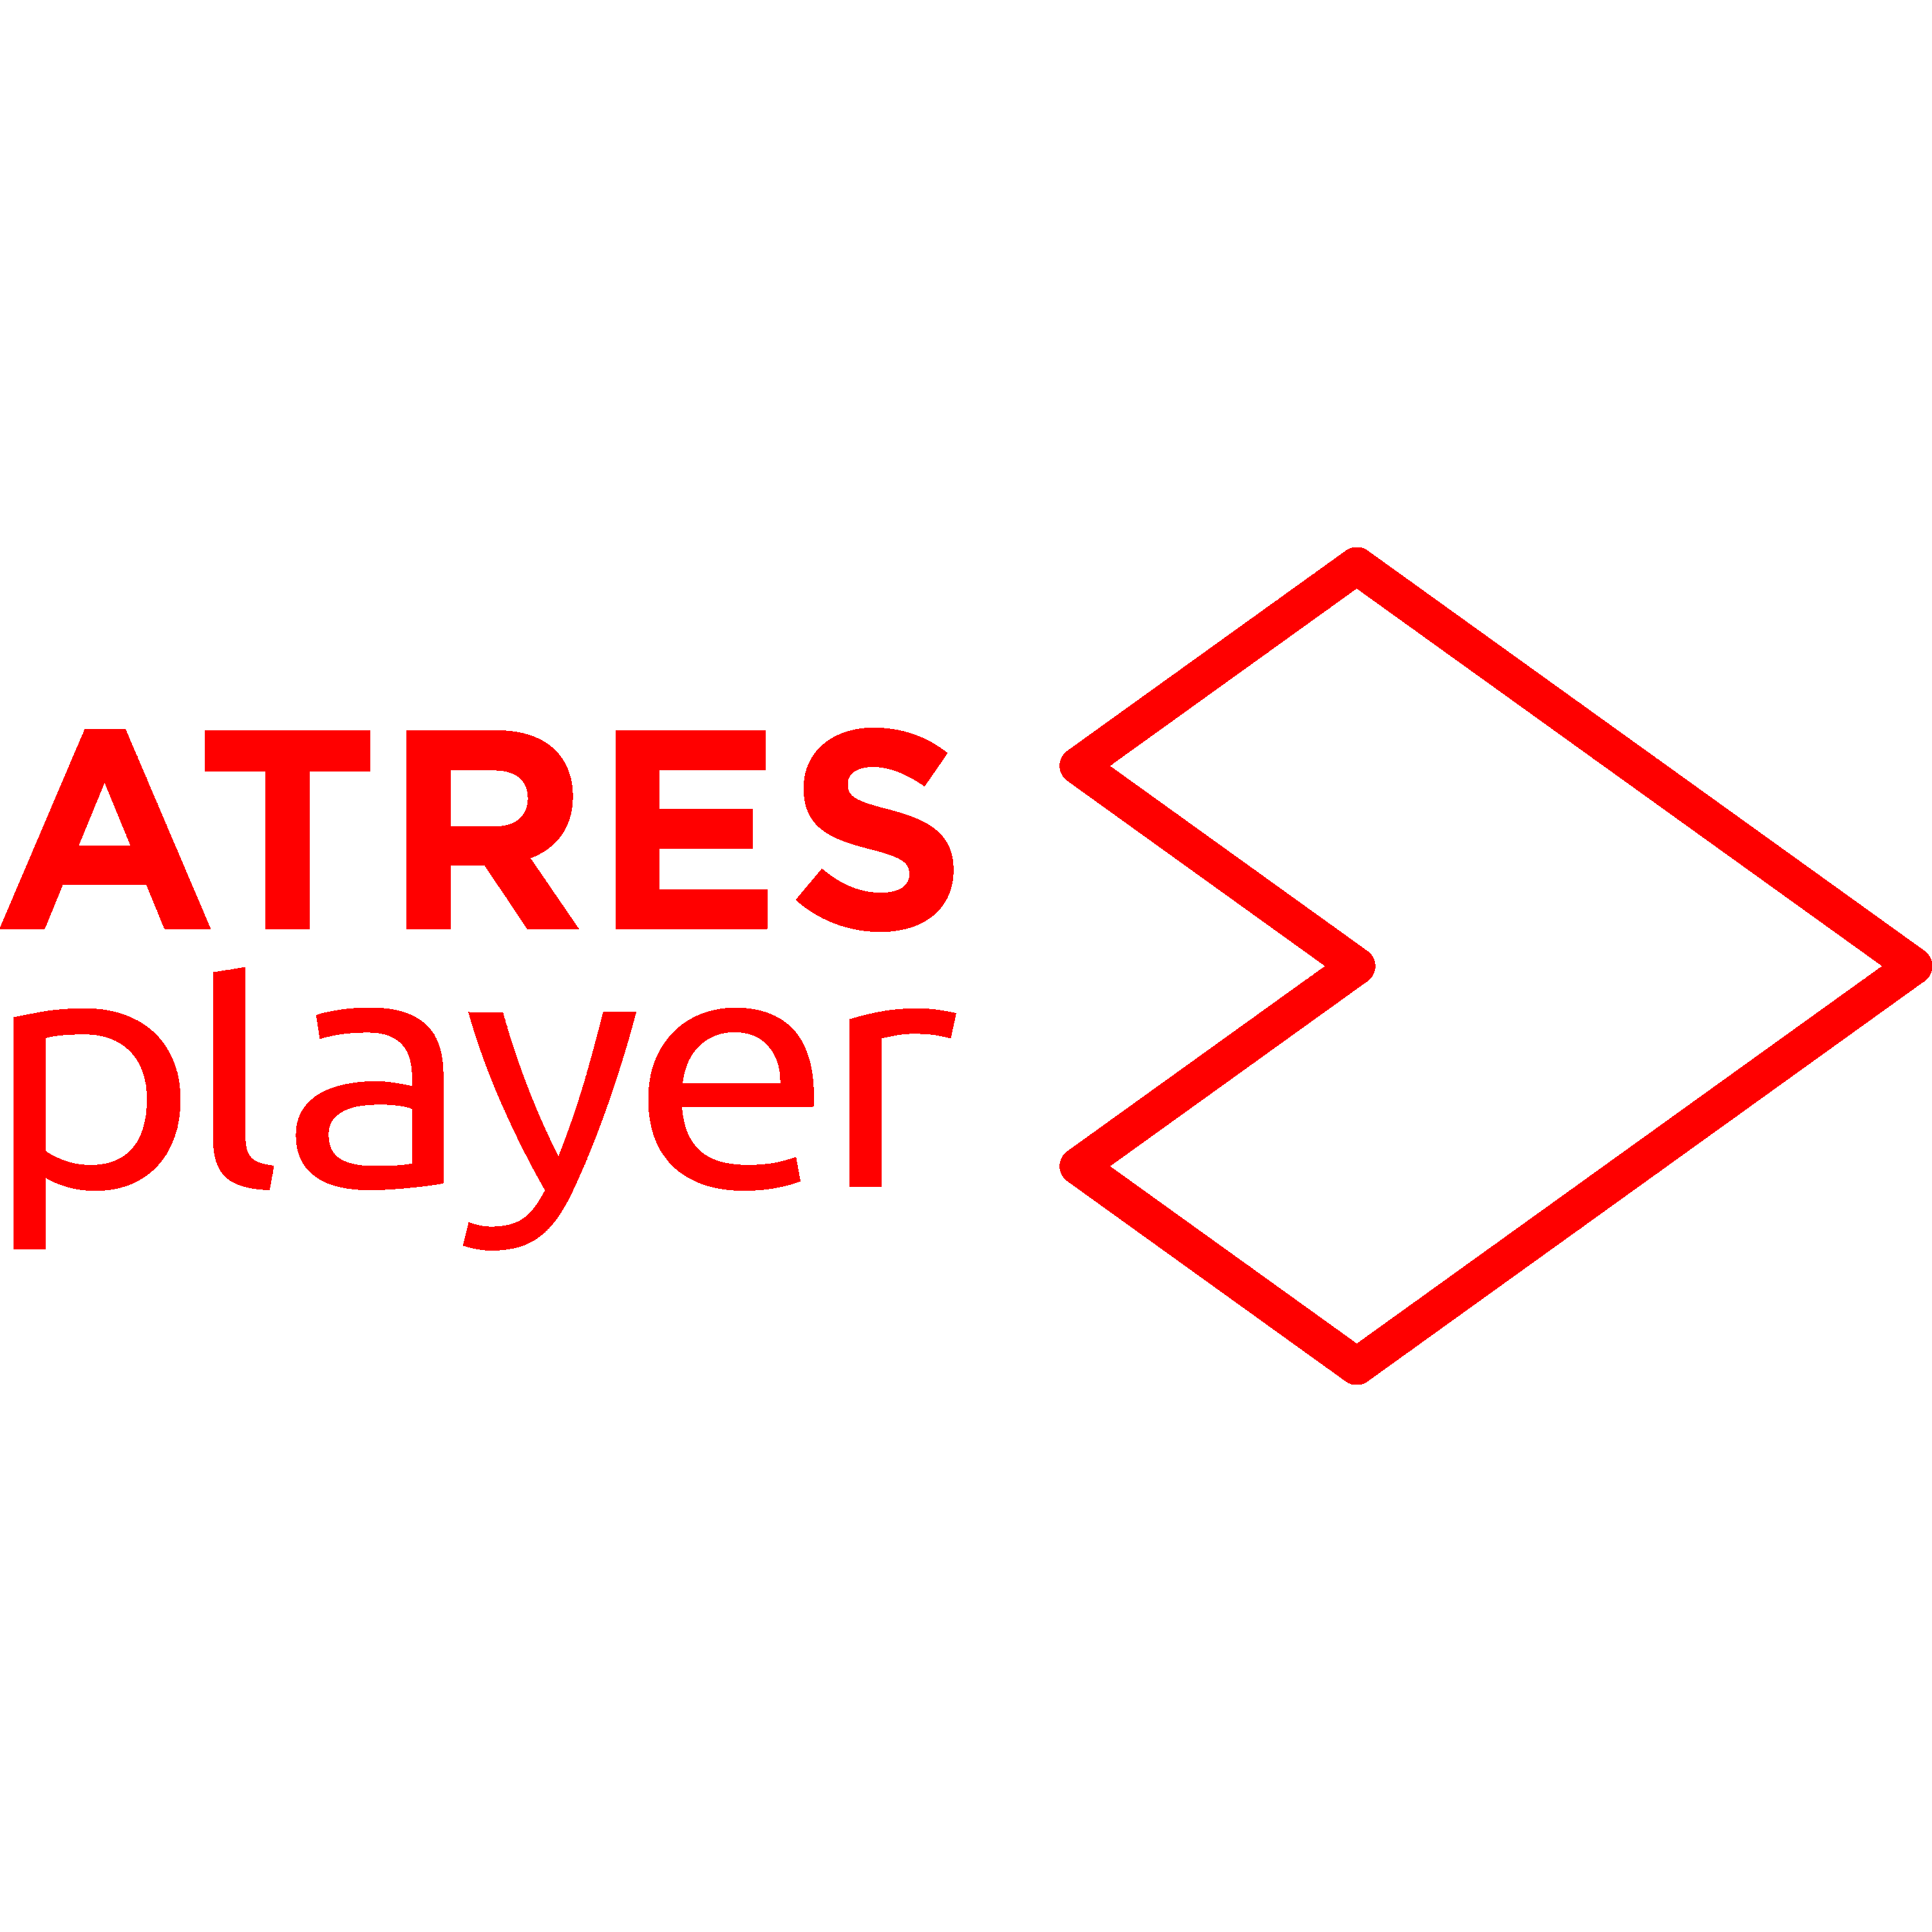 Atresplayer 2018 Logo Transparent Picture